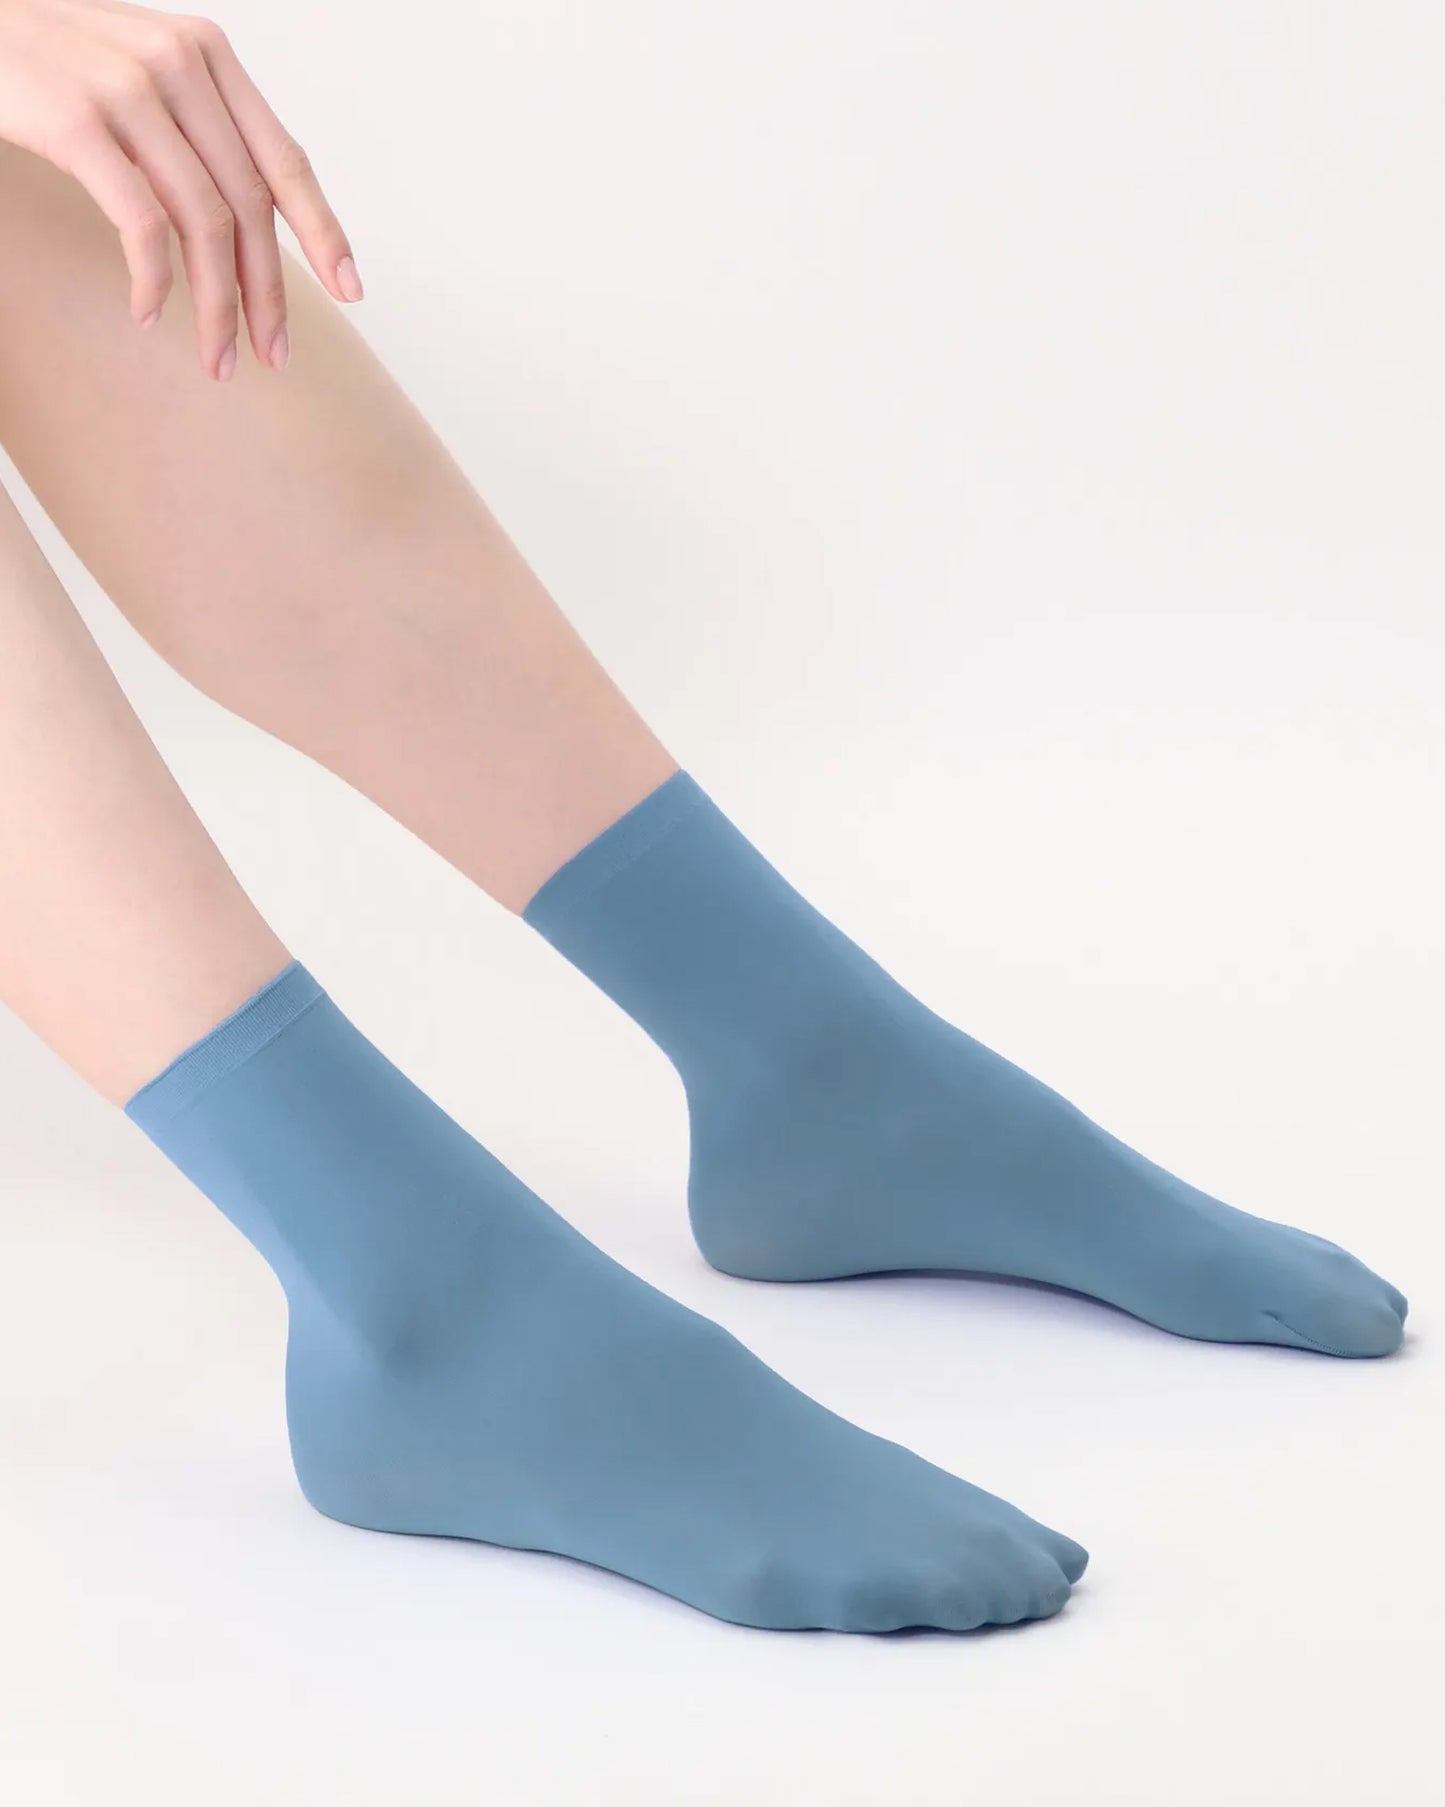 Oroblù All Colors Sock - Soft plain denim (ocean) blue opaque ankle tube socks with plain cuff.